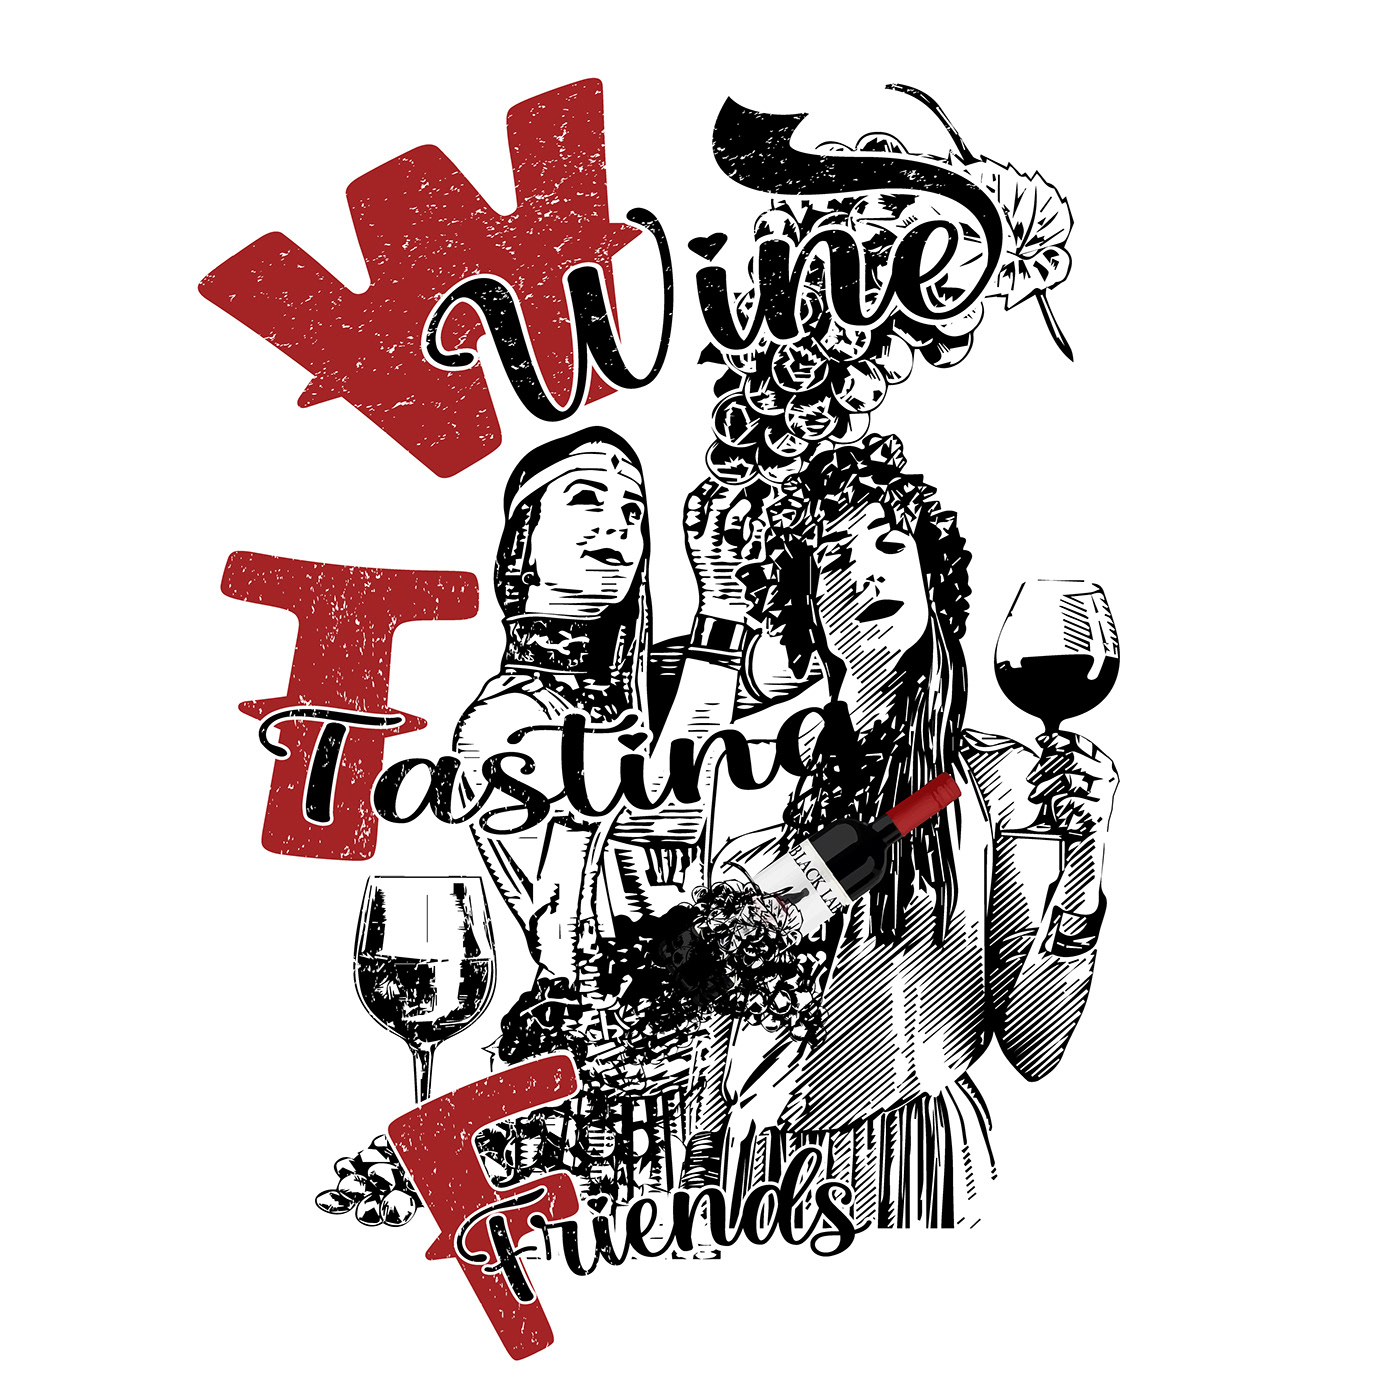 wine t-shirt design